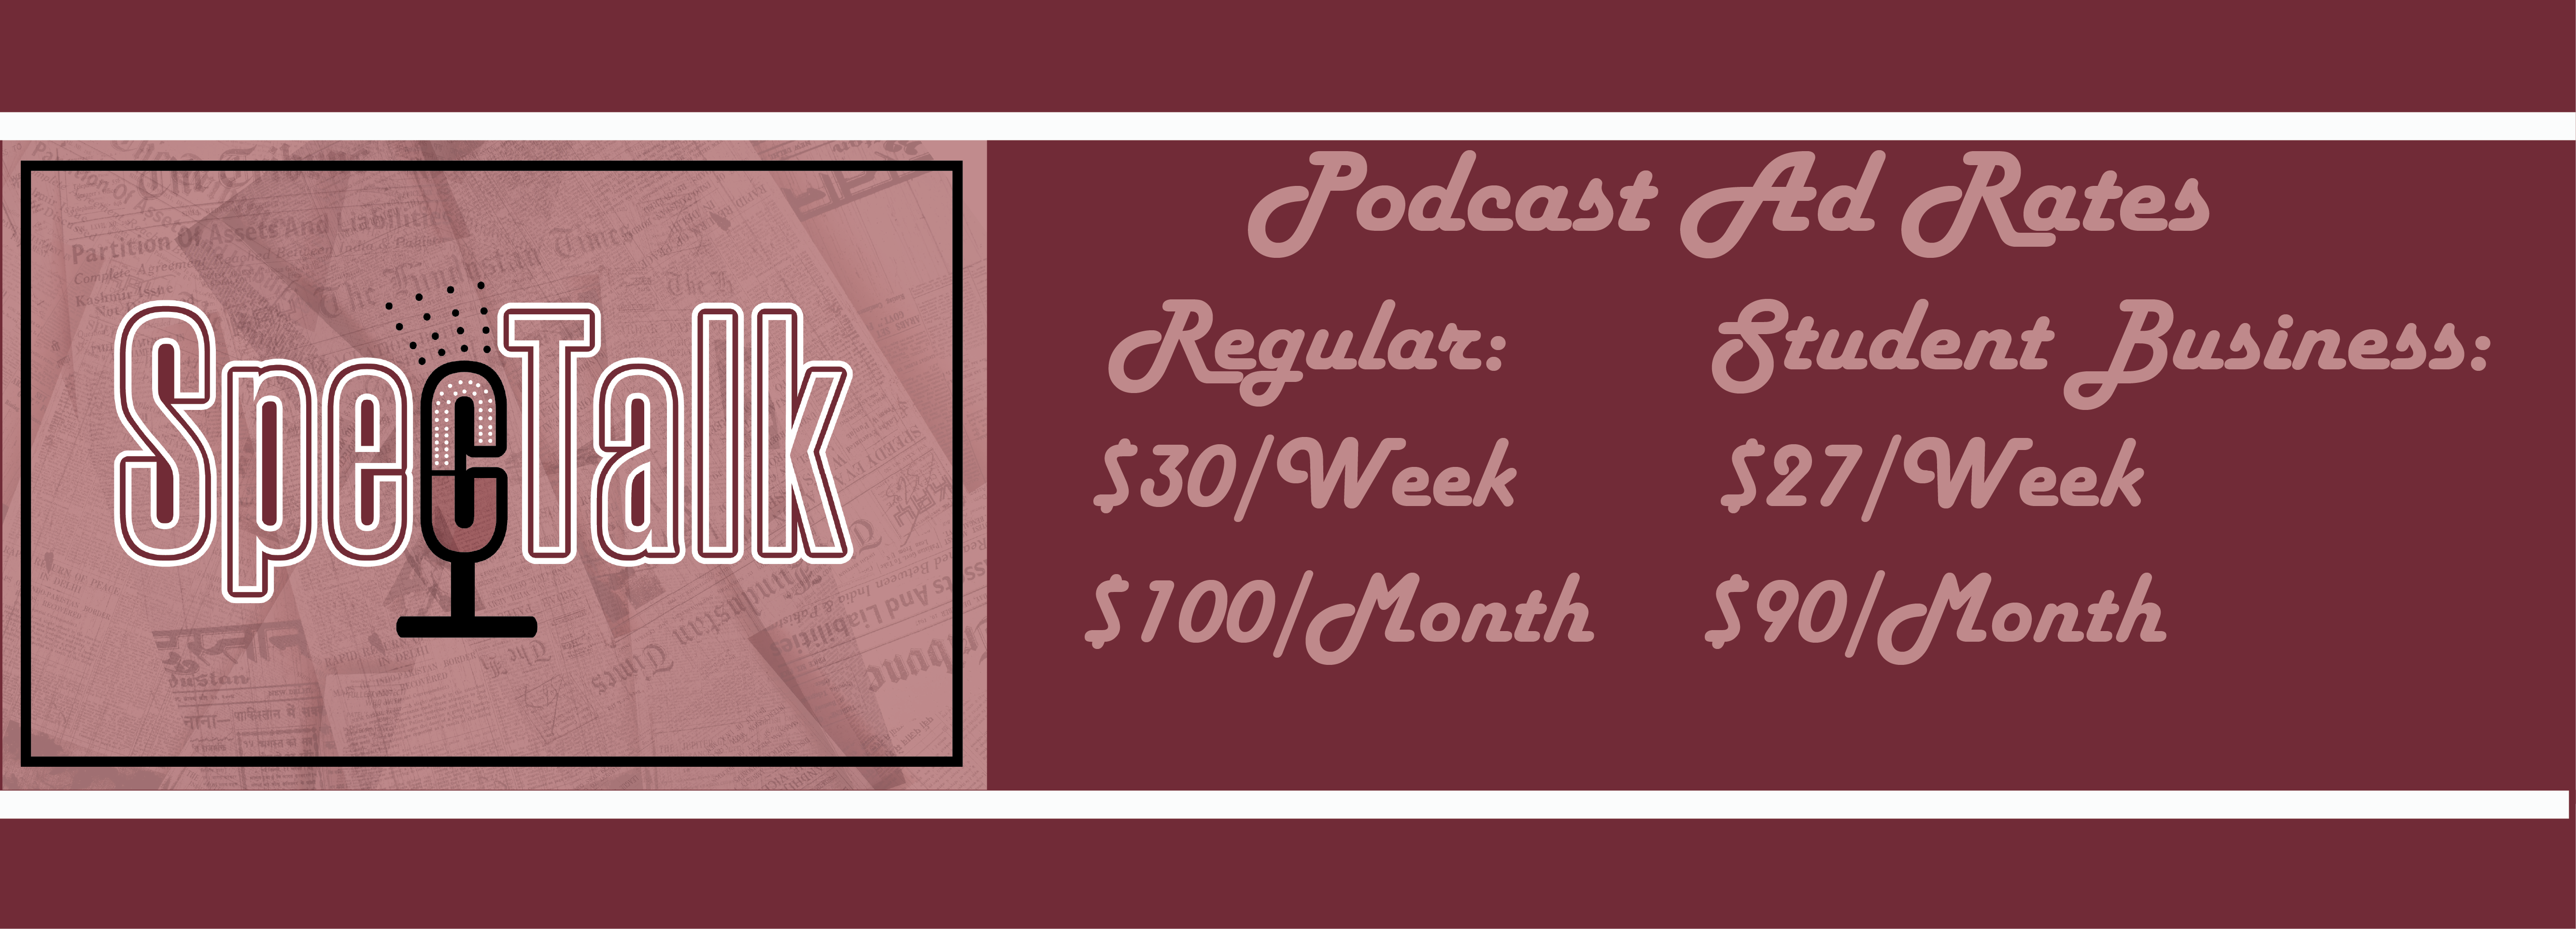 podcast ad rates spectalk